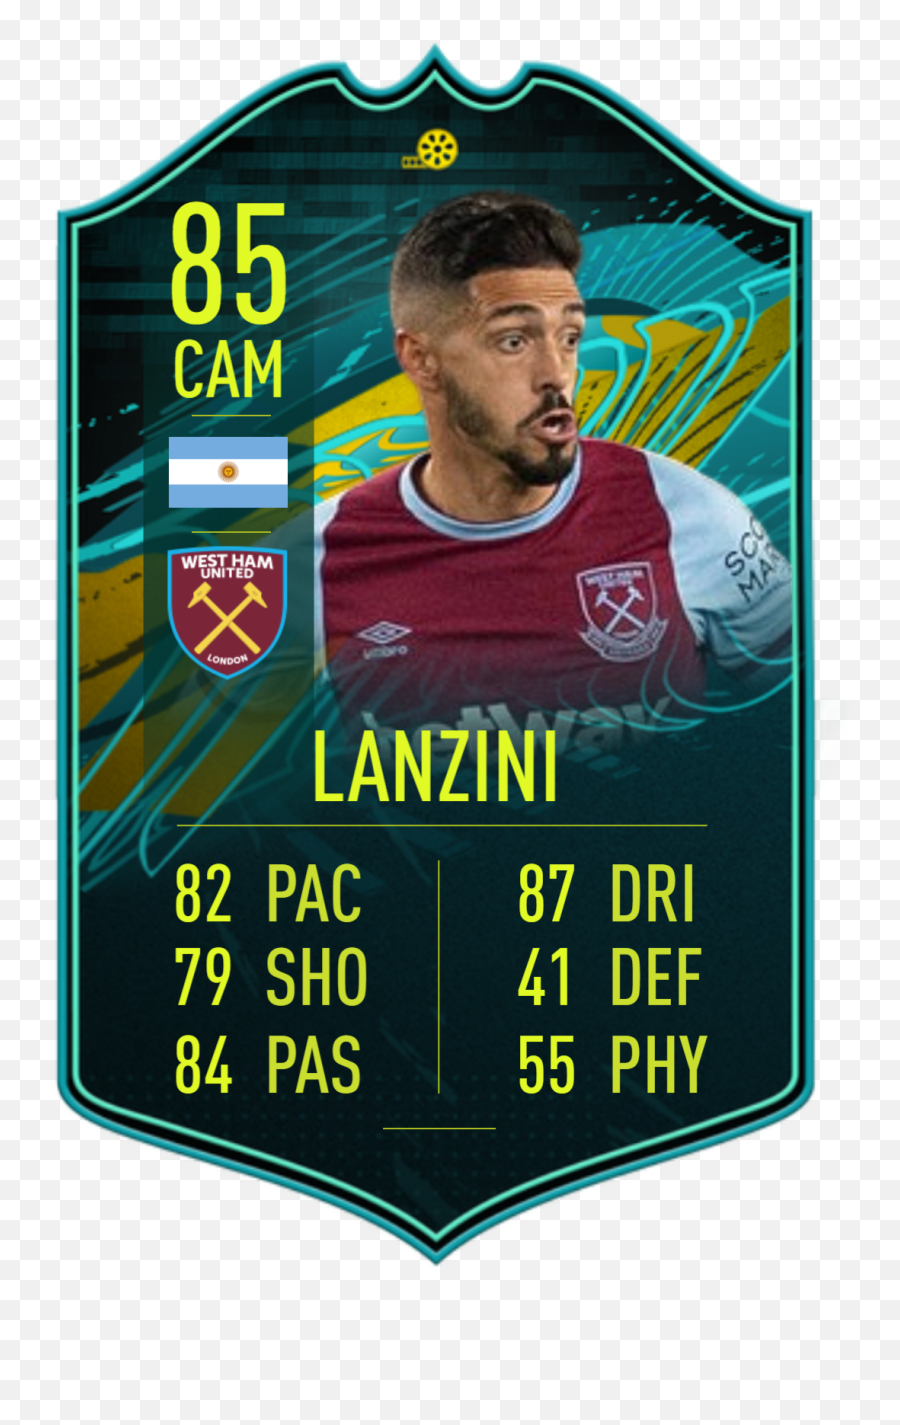 Lanzini Player Moments Card For That Goal Against Tottenham - Pulisic Fifa 21 87 Card Emoji,Tottenham Logo